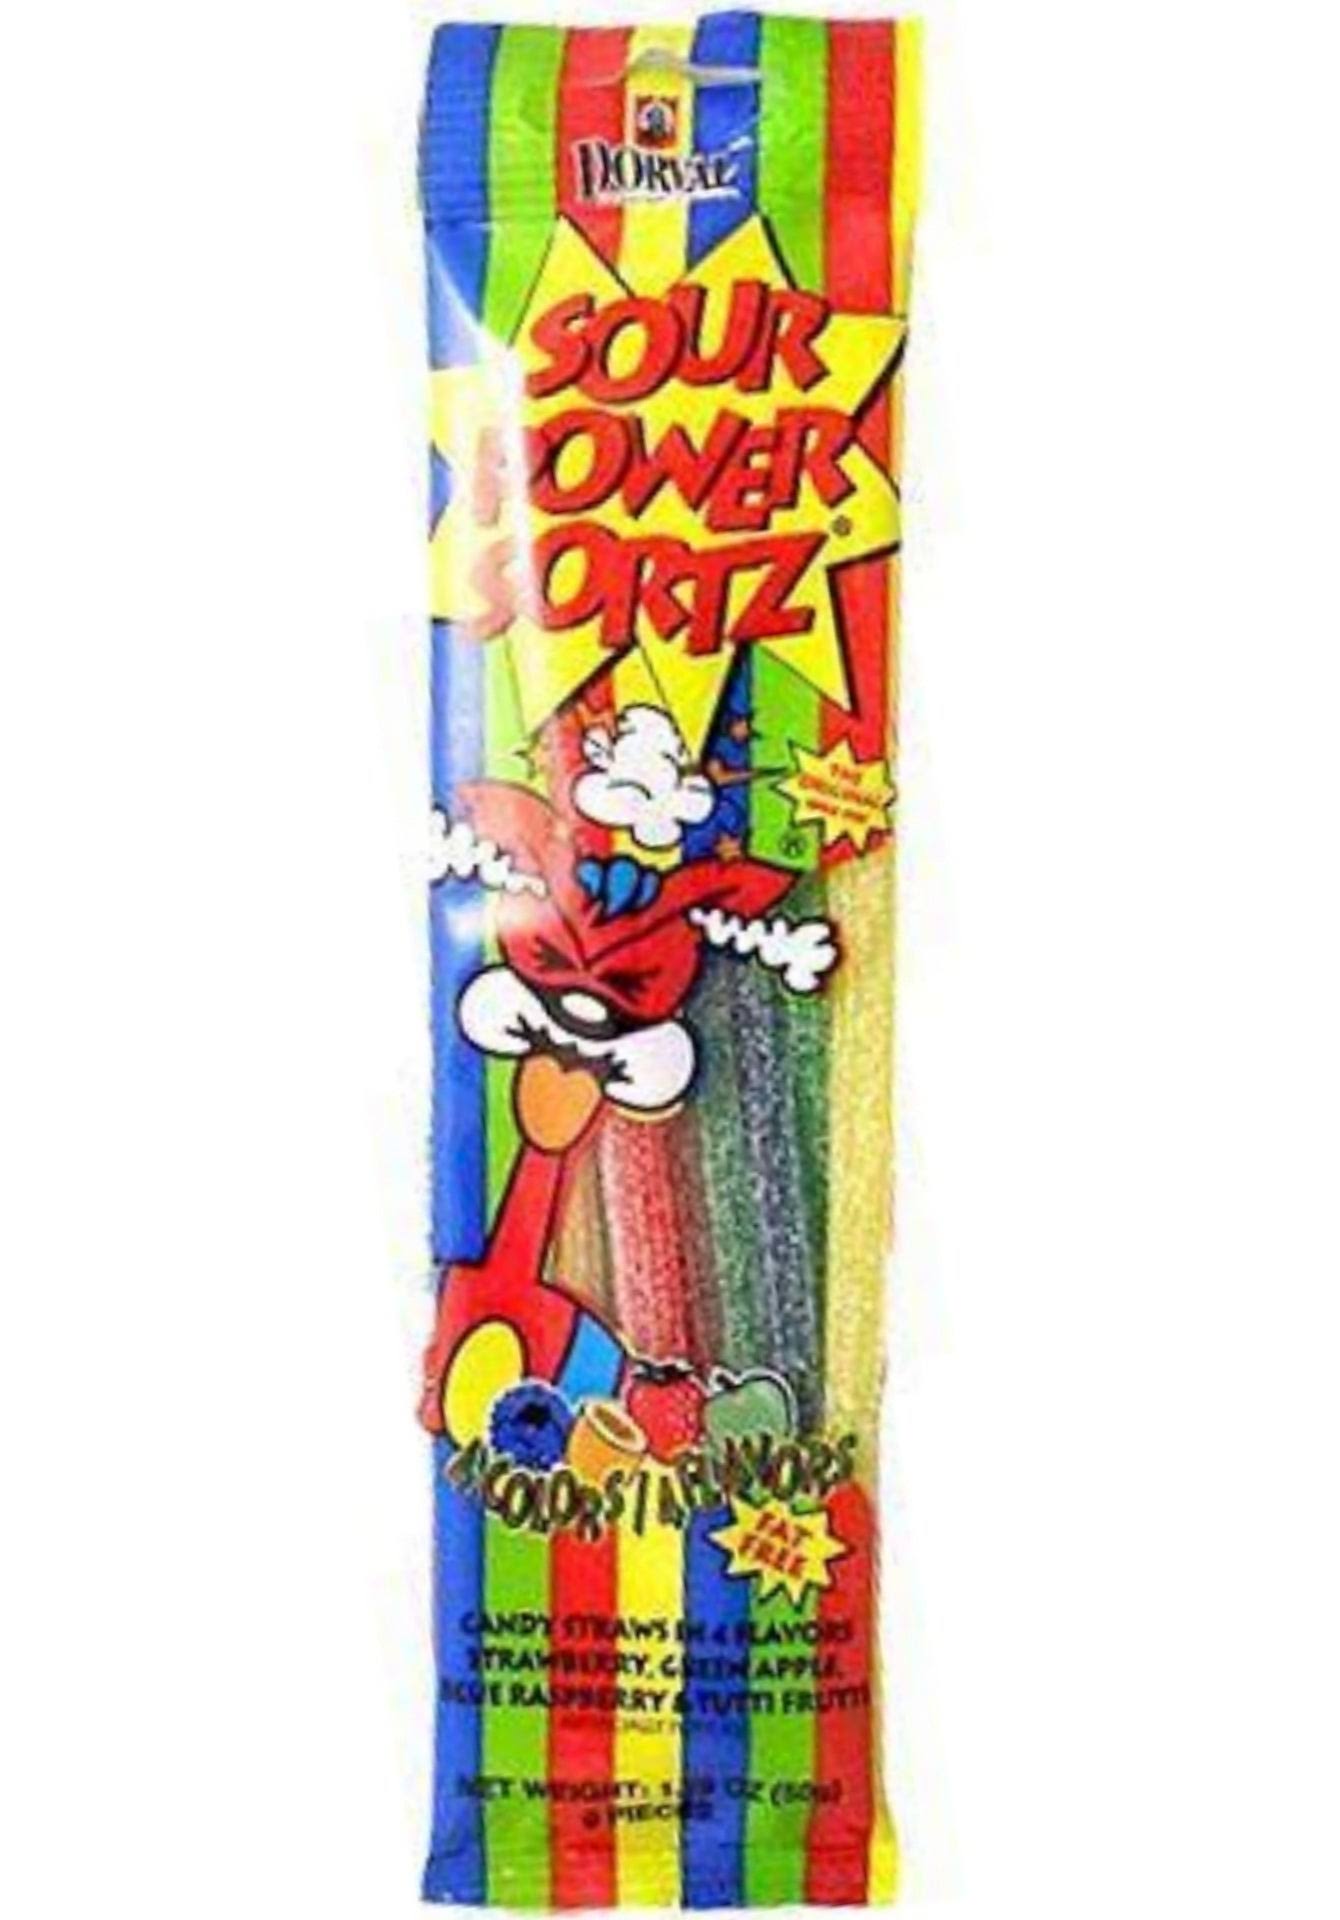 Dorval Sour Power Sortz Straws Candy